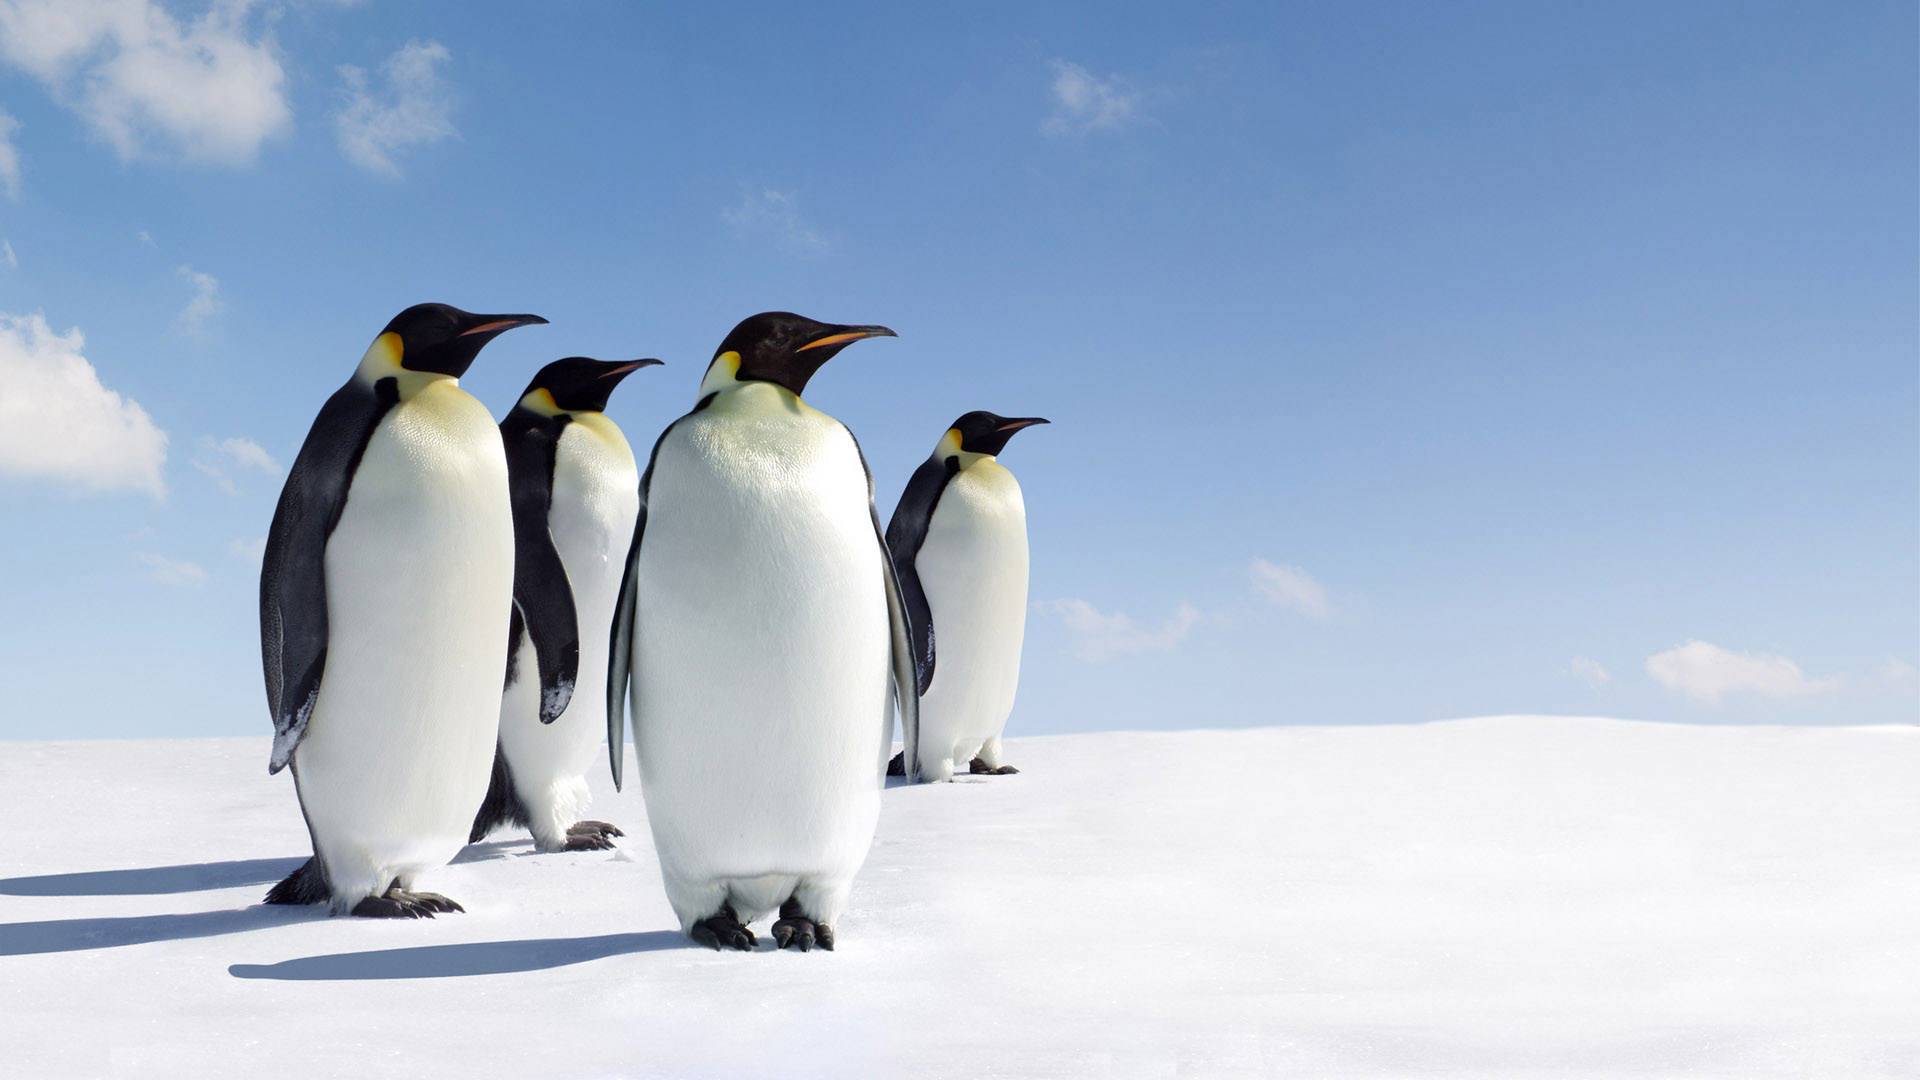 penguins on snow wallpaper background